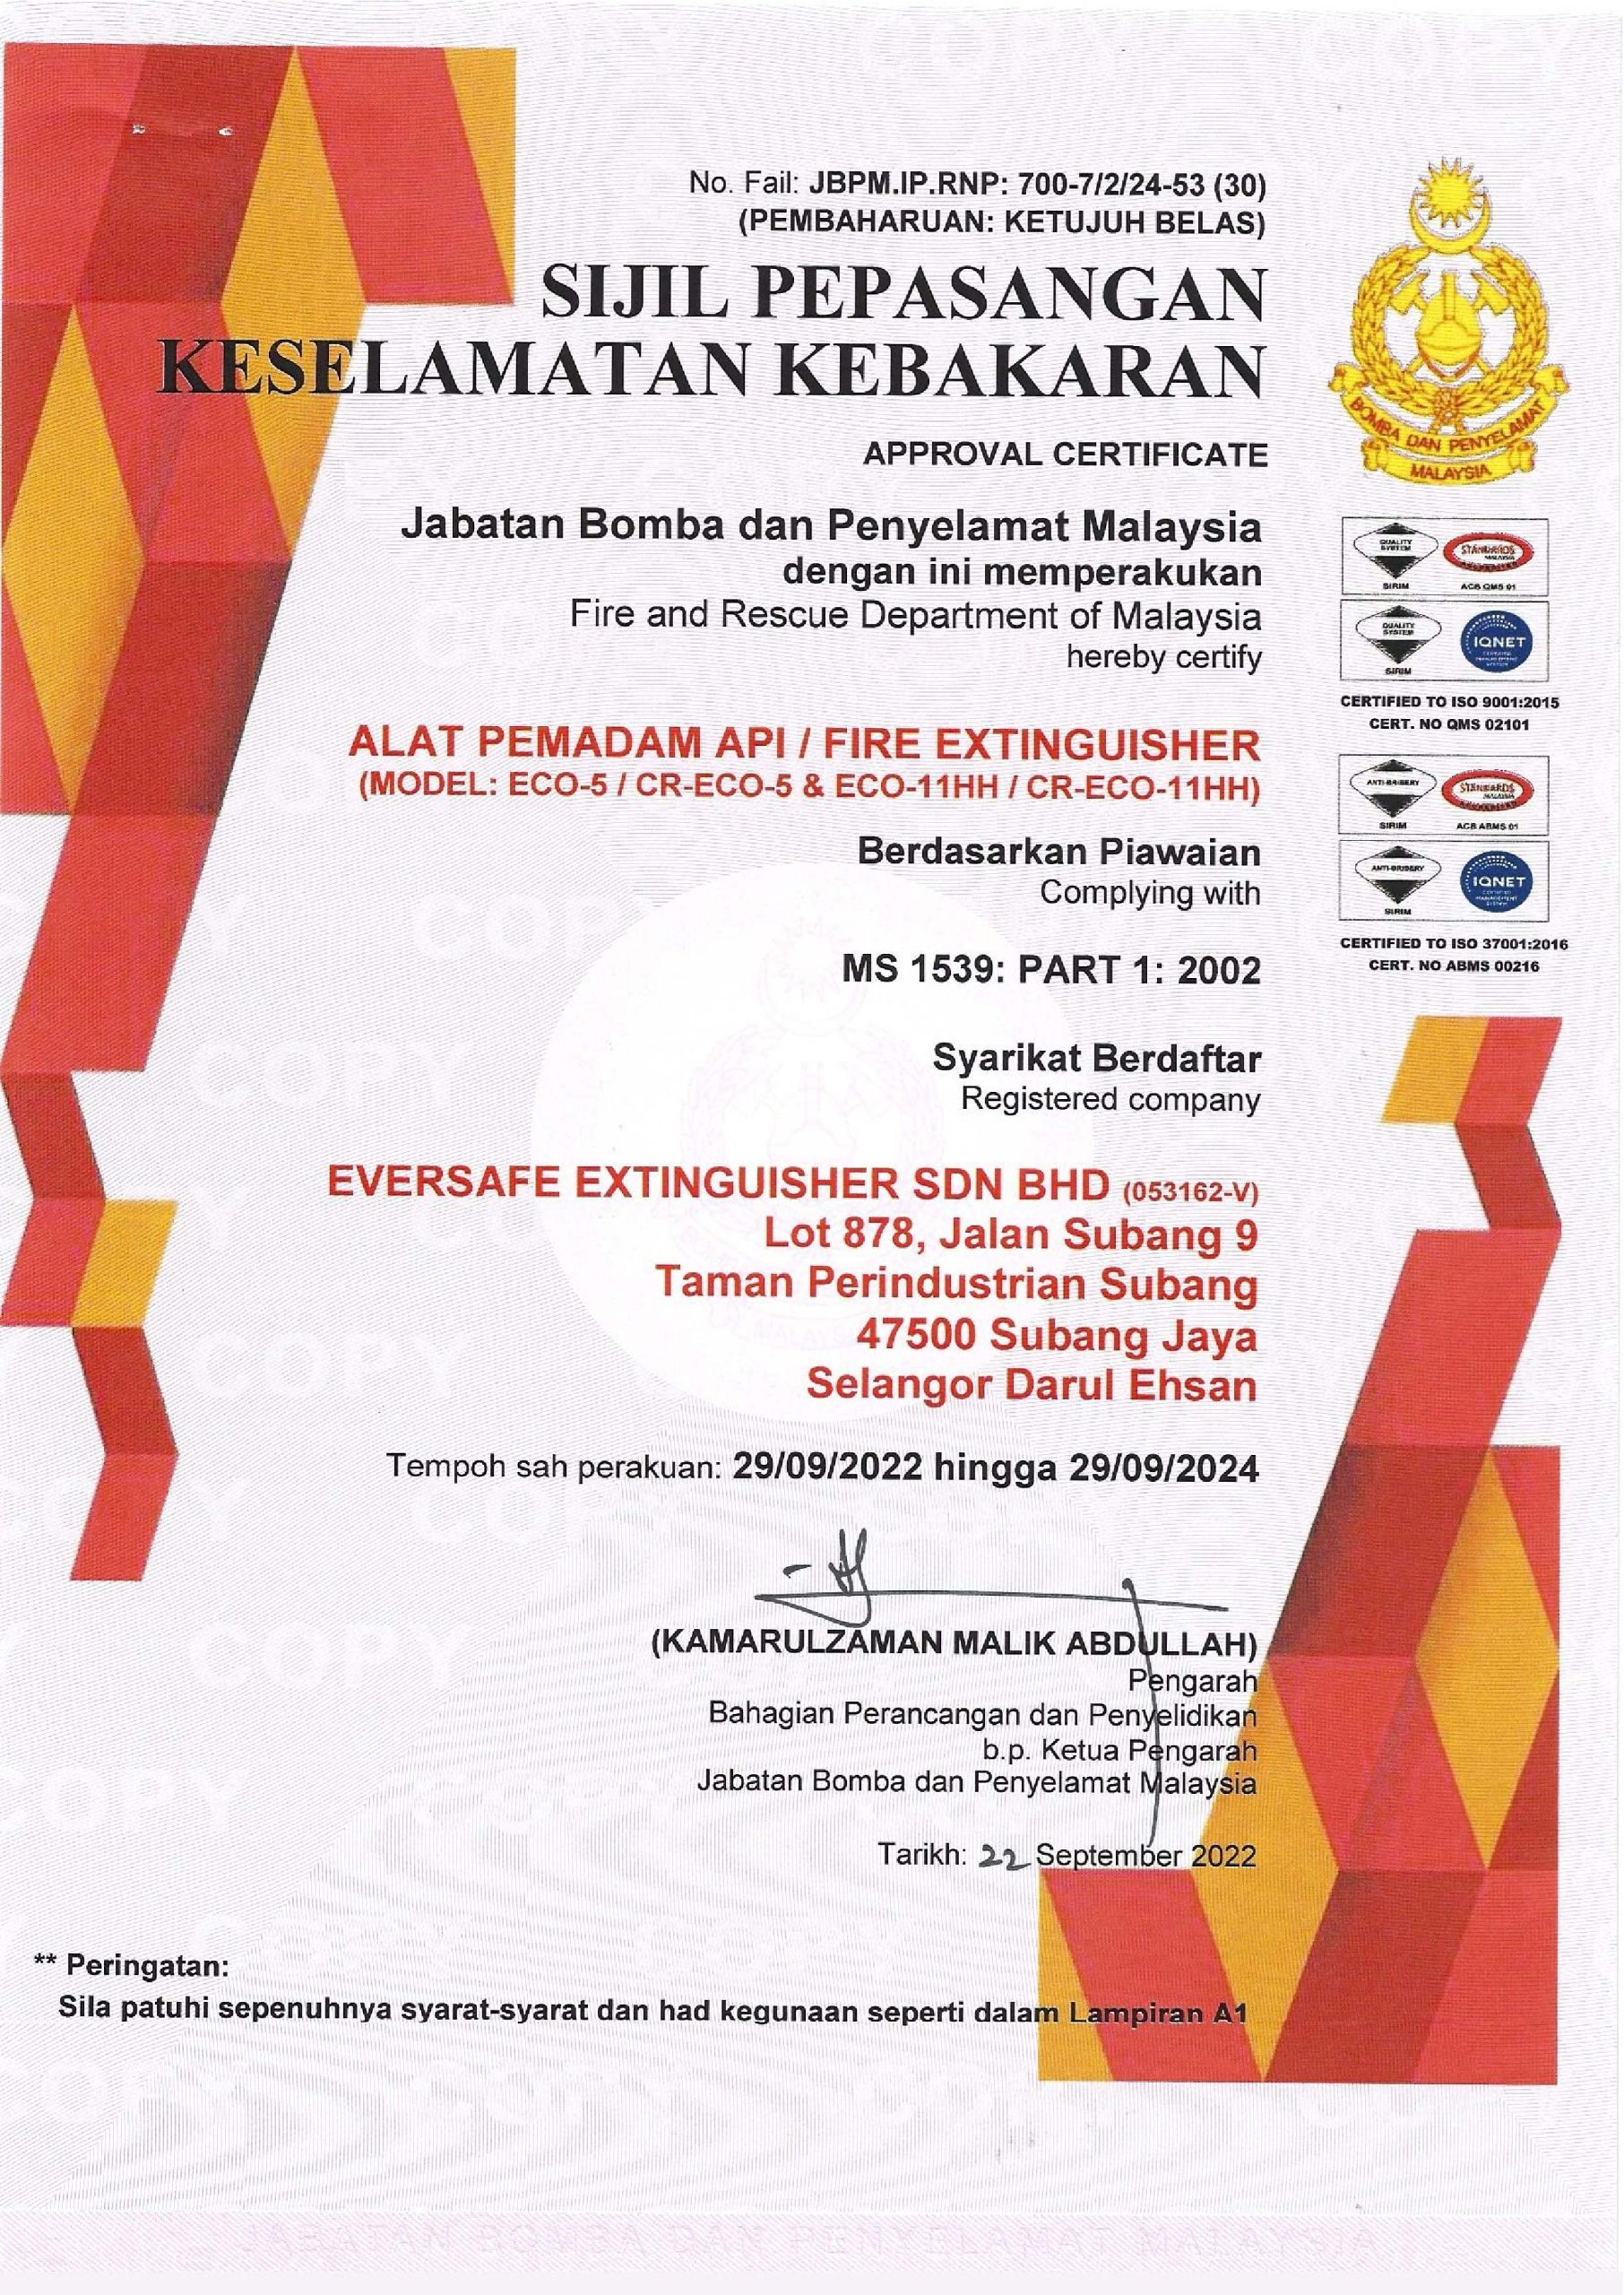 Bomba Approval Certificate CO2